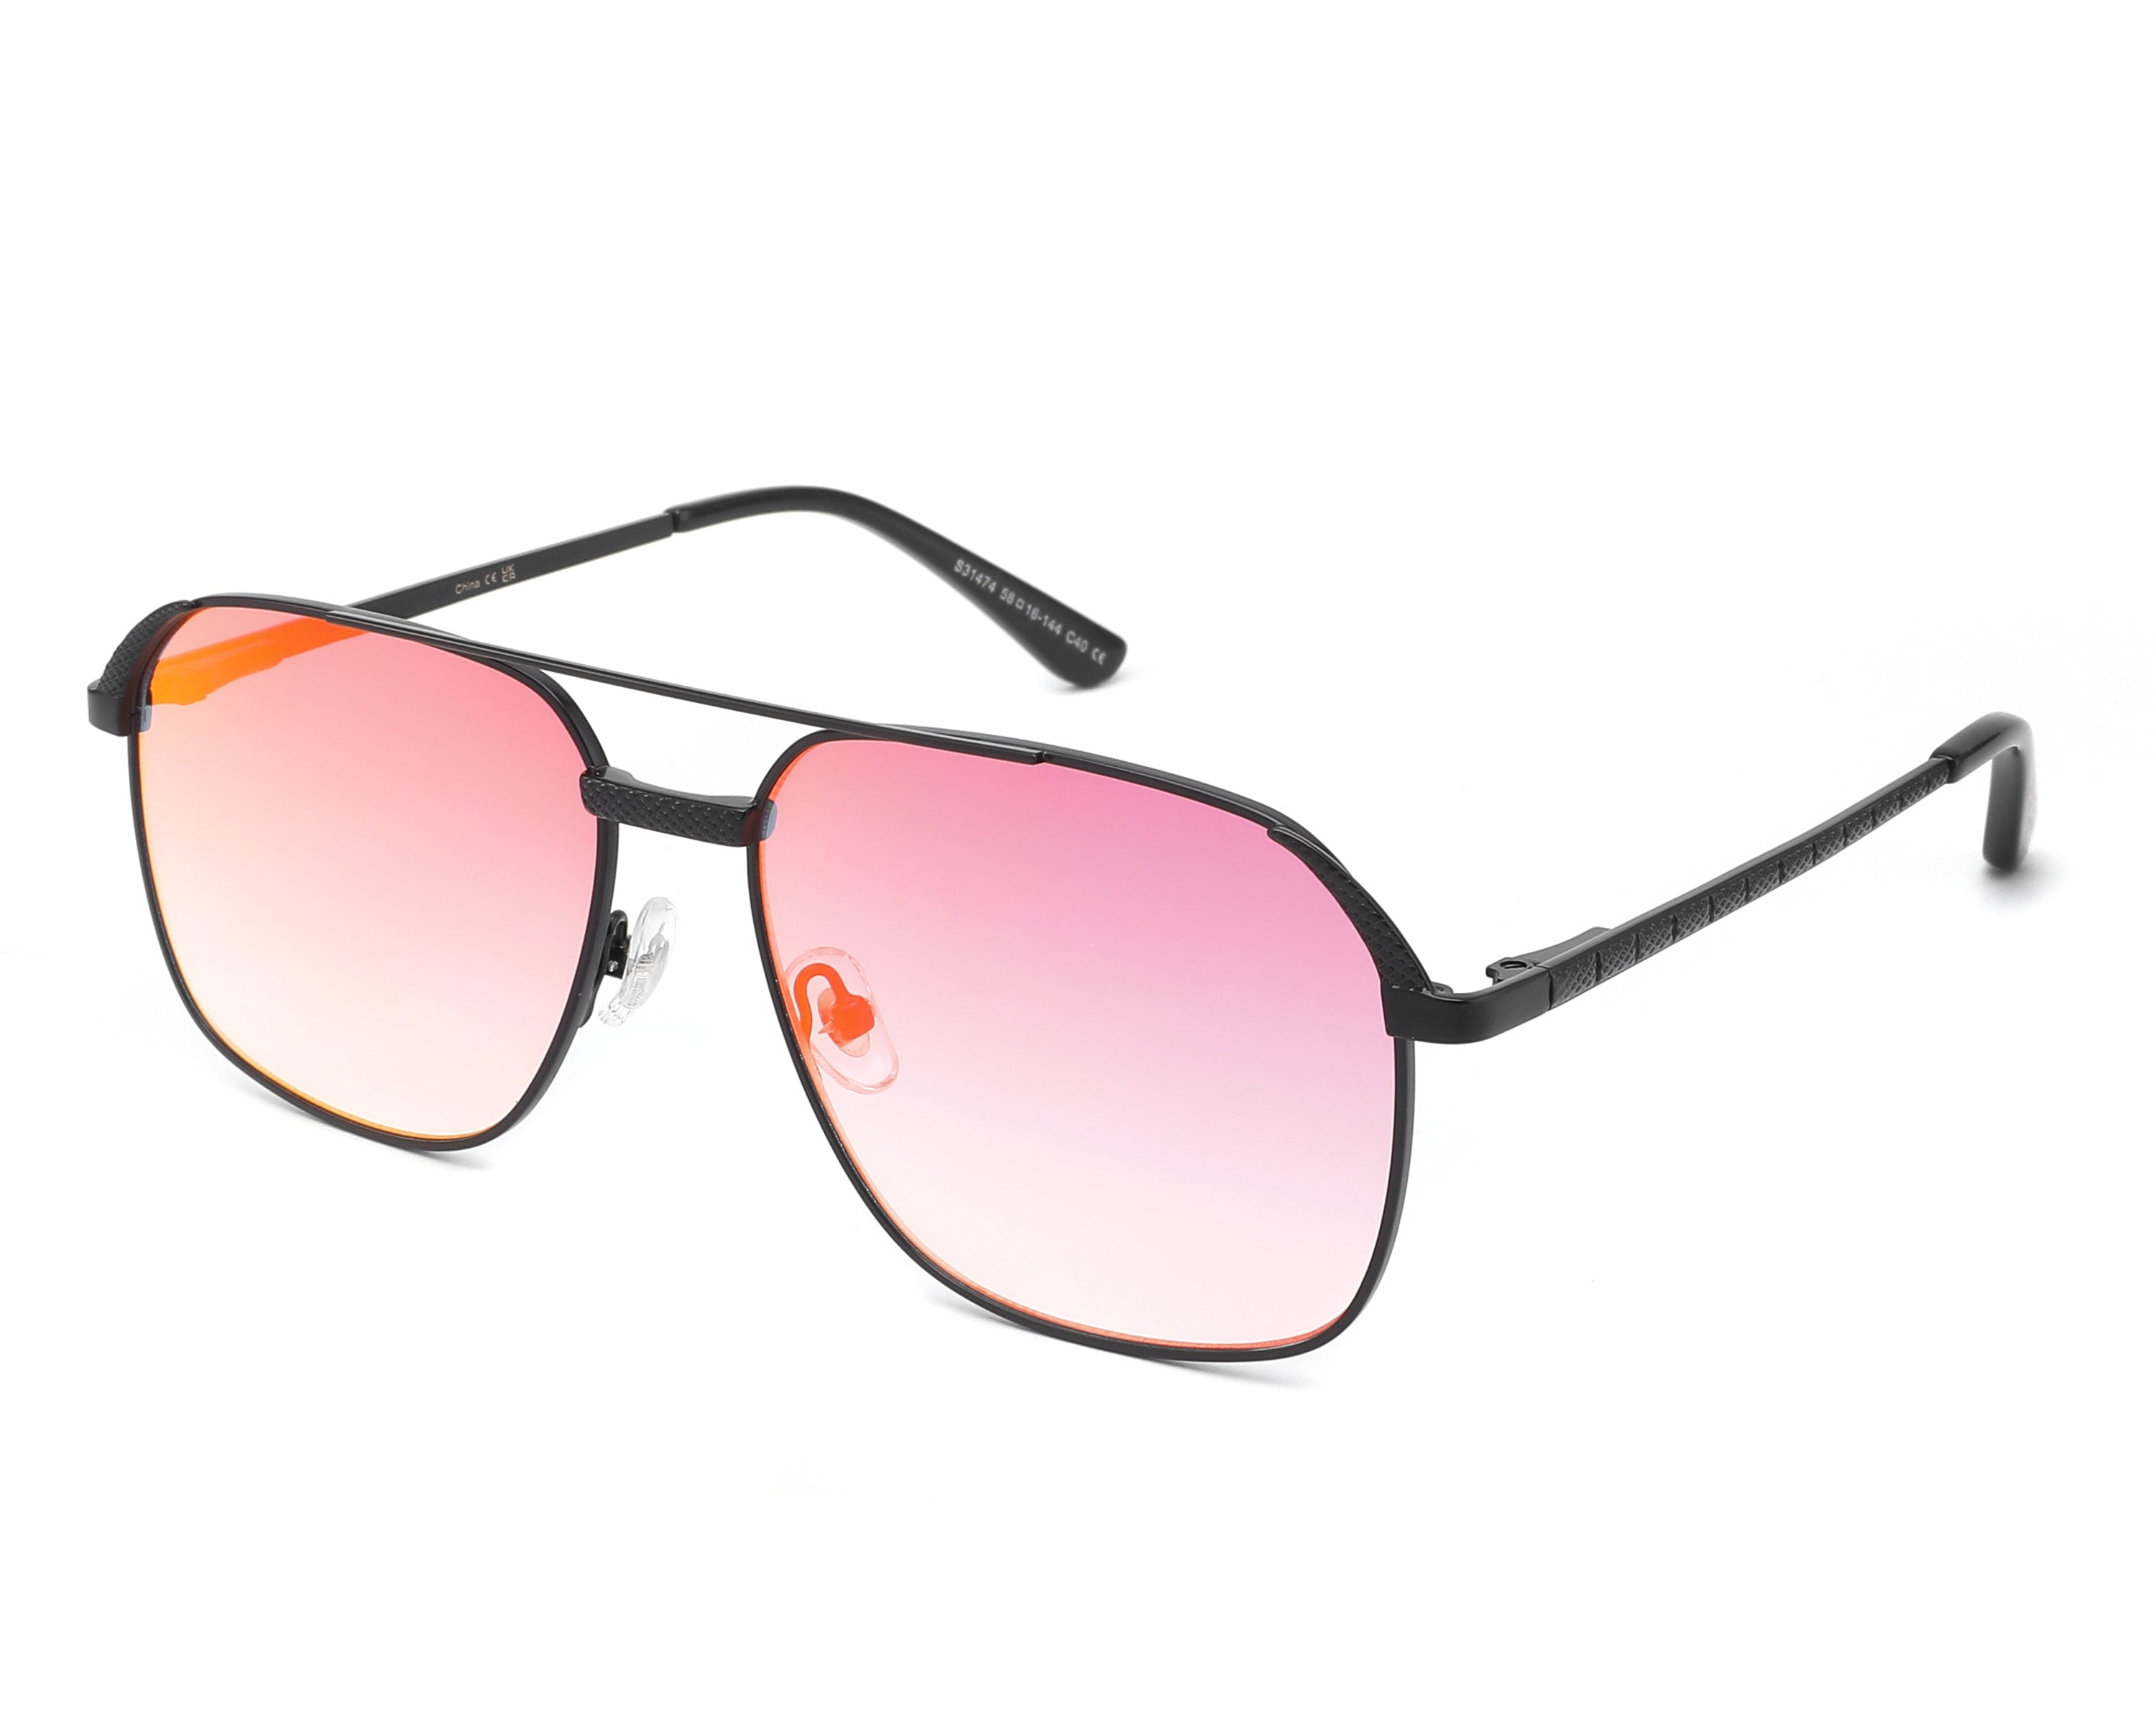 Sunglasses: Posa